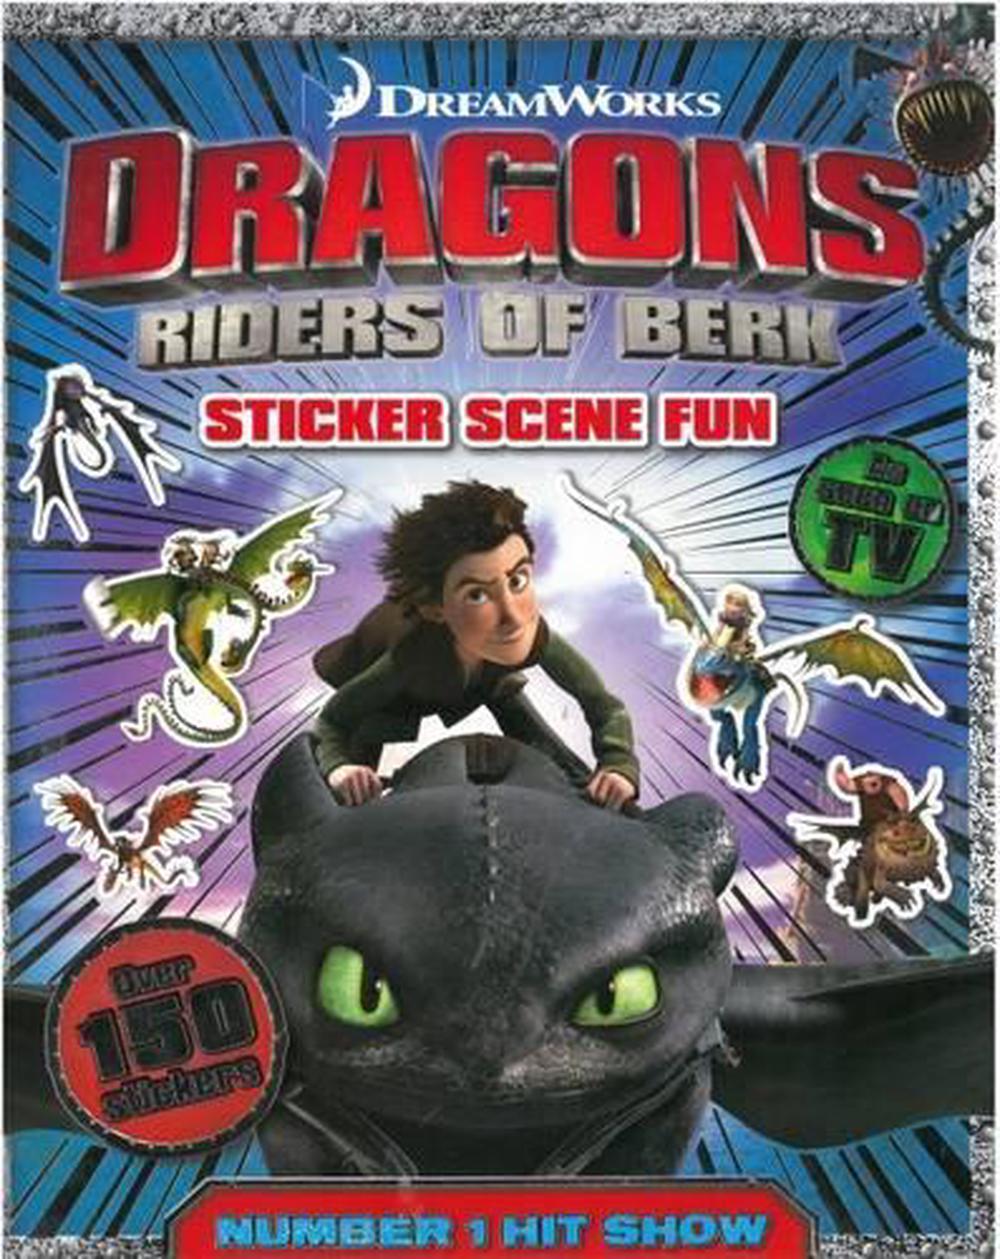 Dragons Riders Of Berk: Sticker